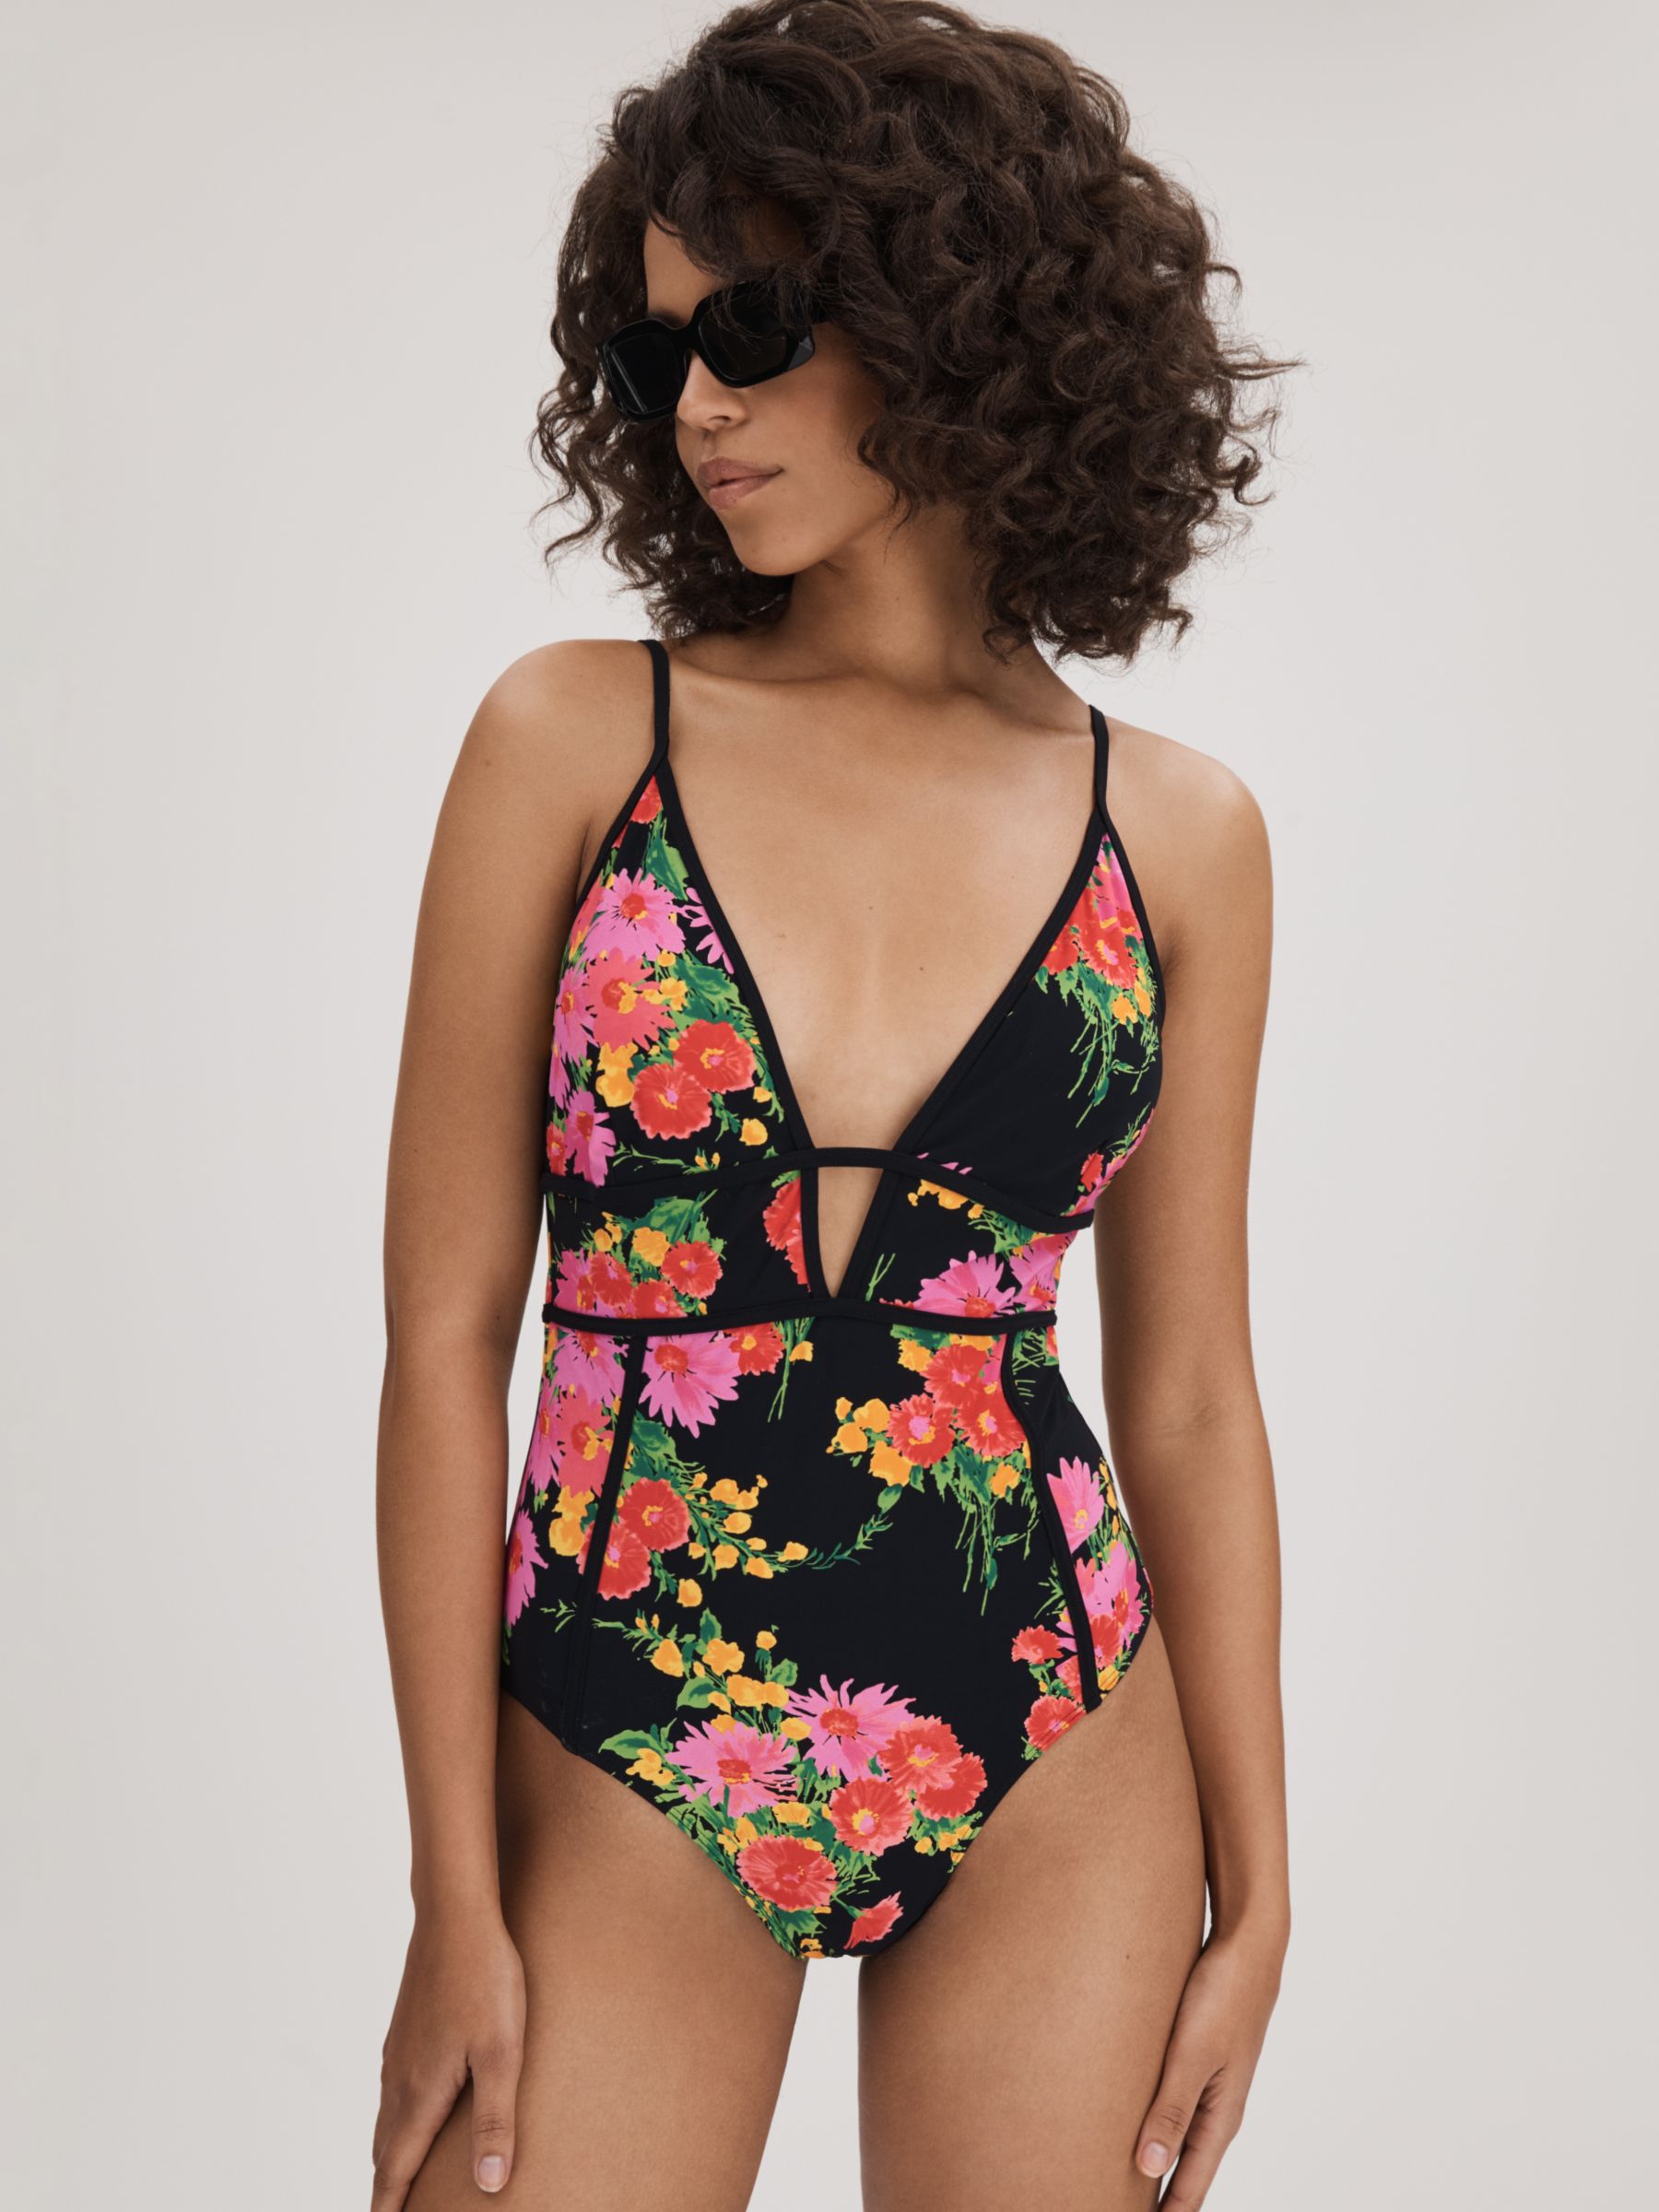 FLORERE Panelled Plunge Floral Print Swimsuit, Black/Multi, 8